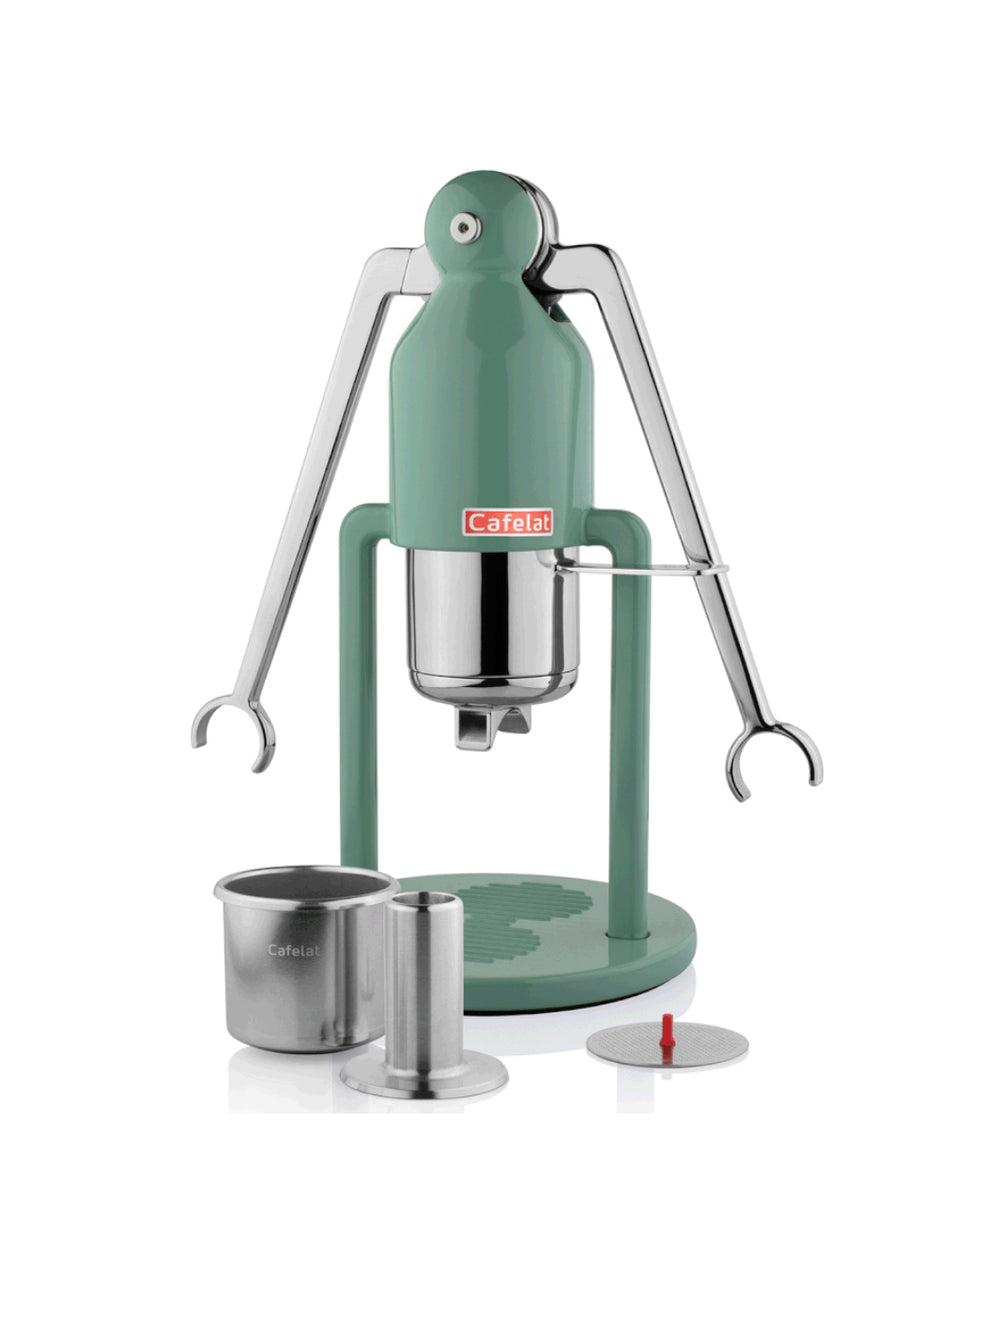 CAFELAT Robot Espresso Maker